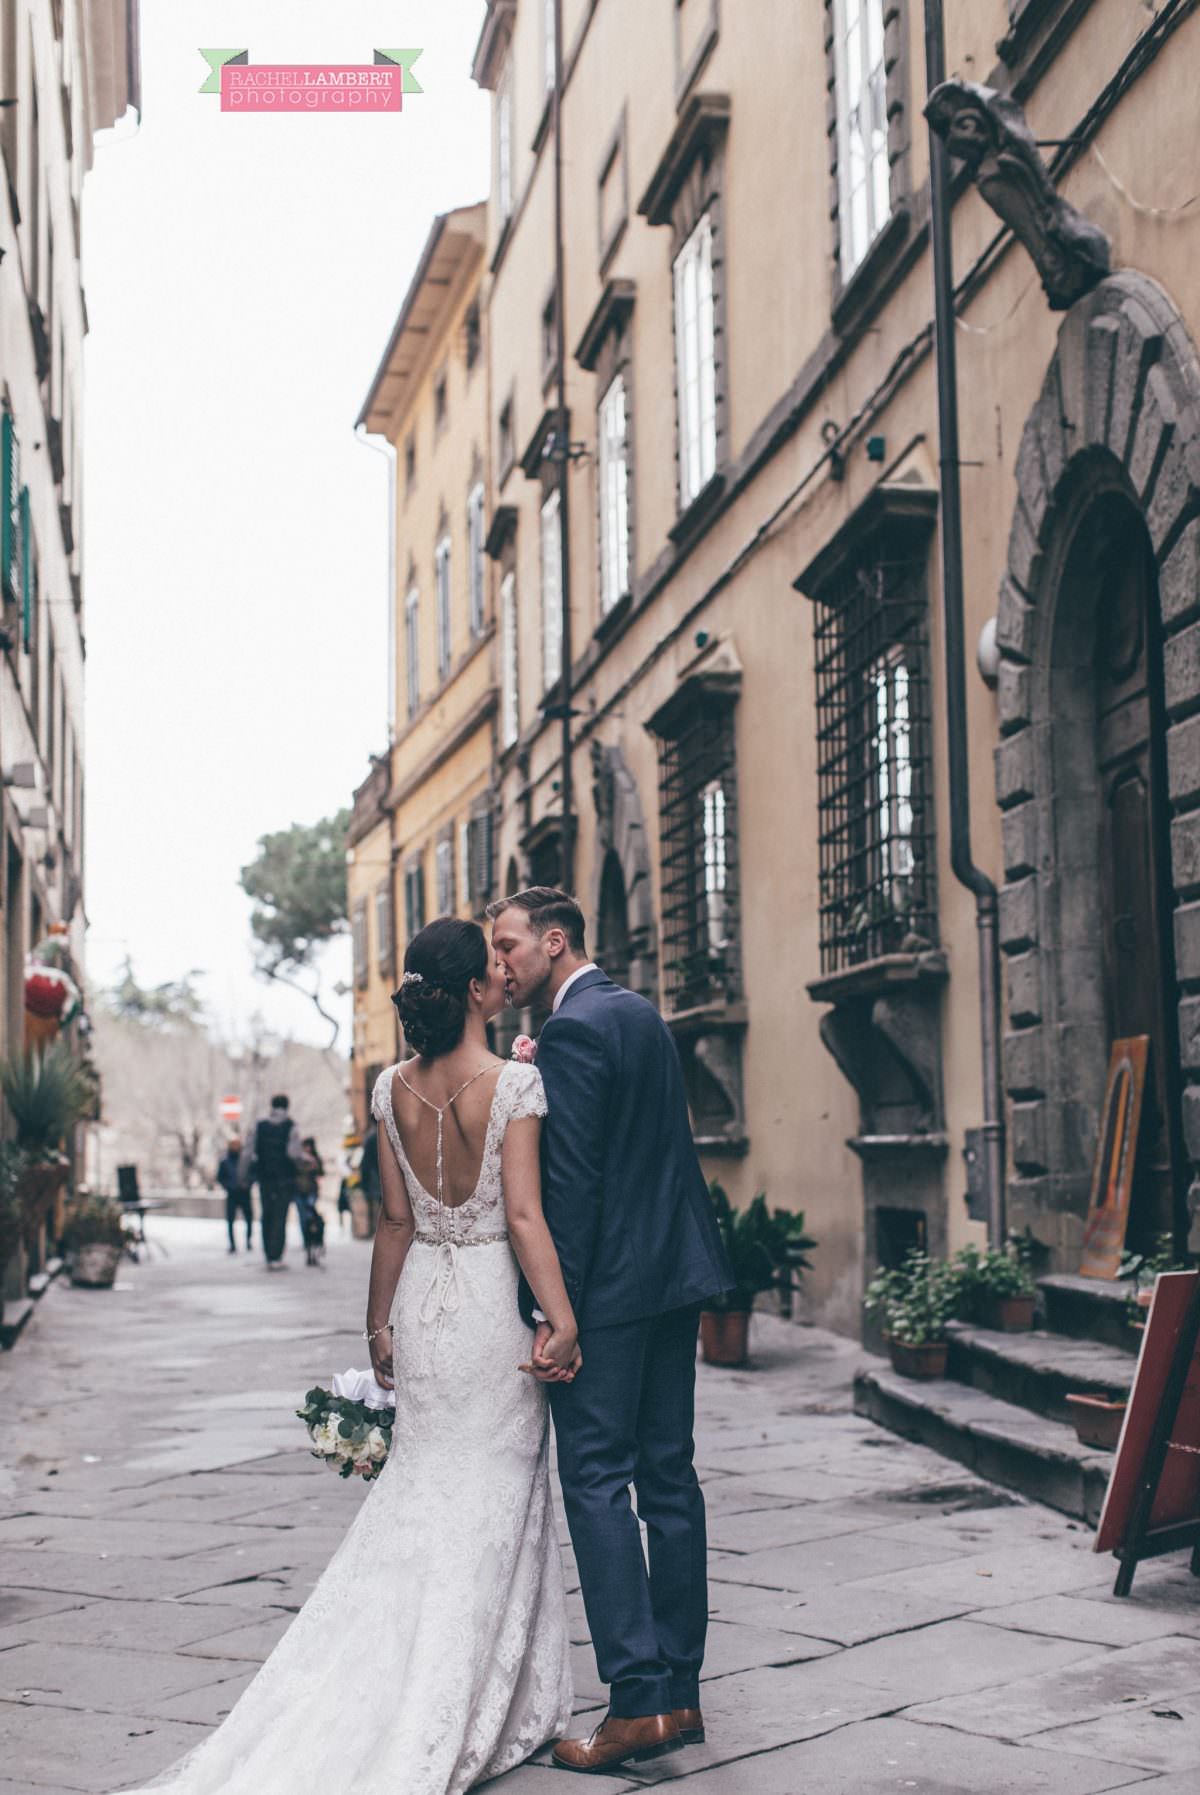 bride and groom portrait wedding in italy colour cortona tuscany walking through street